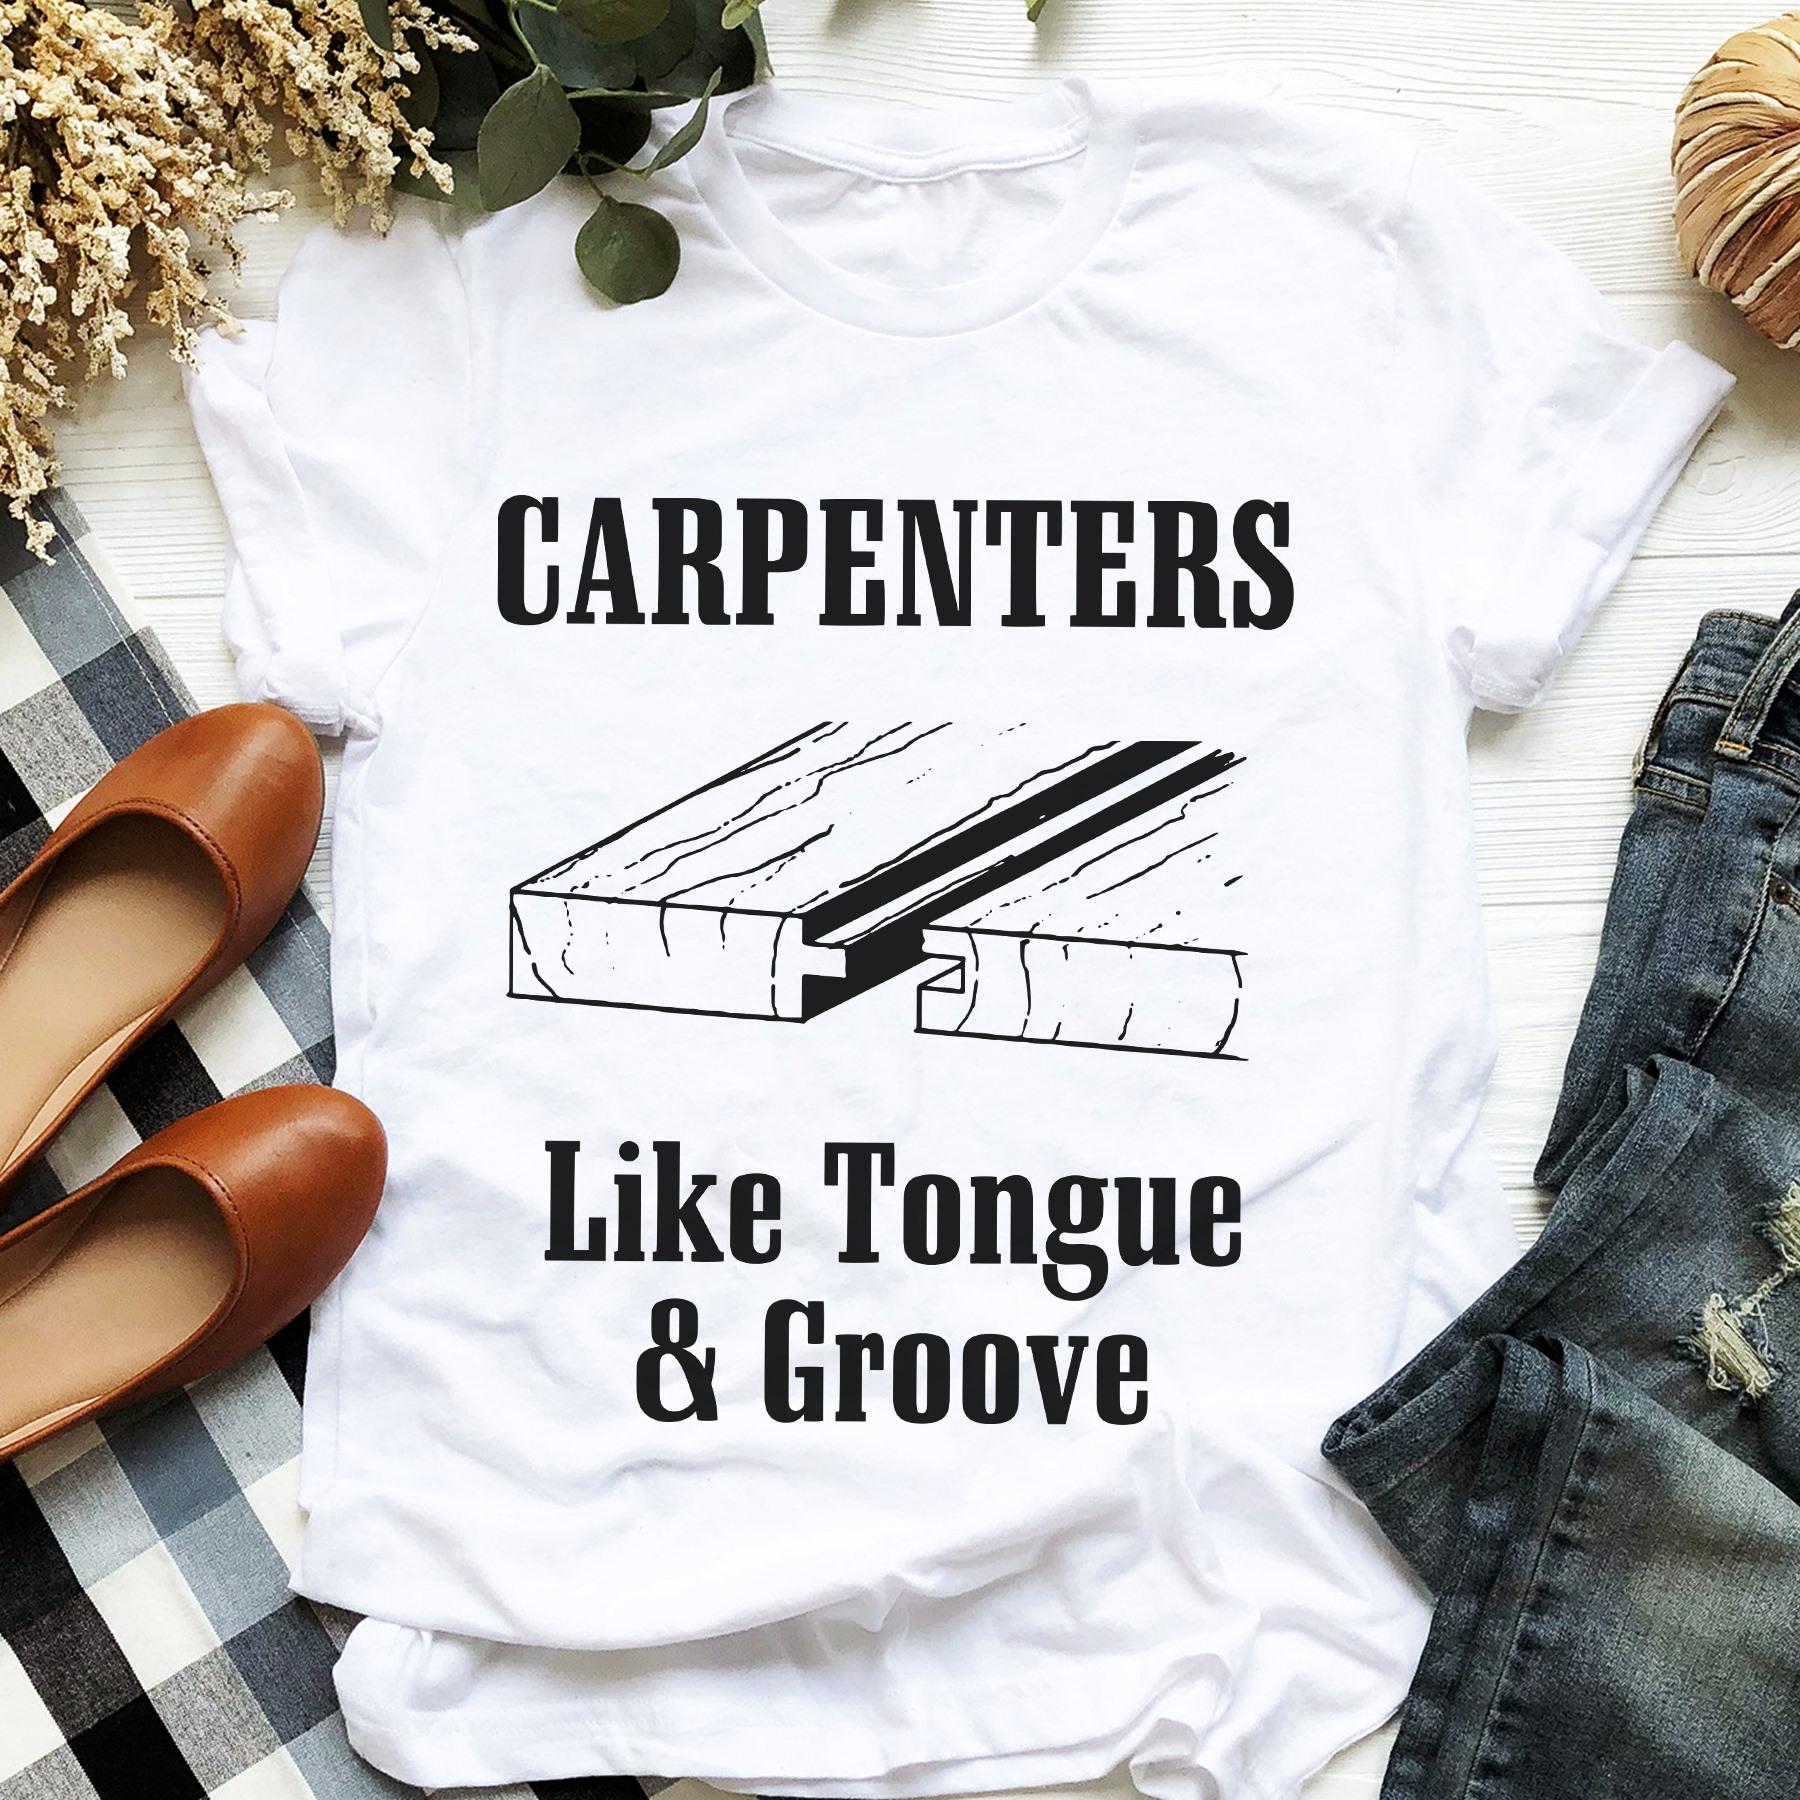 Carpenters like tongue and groove - Carpenter the job